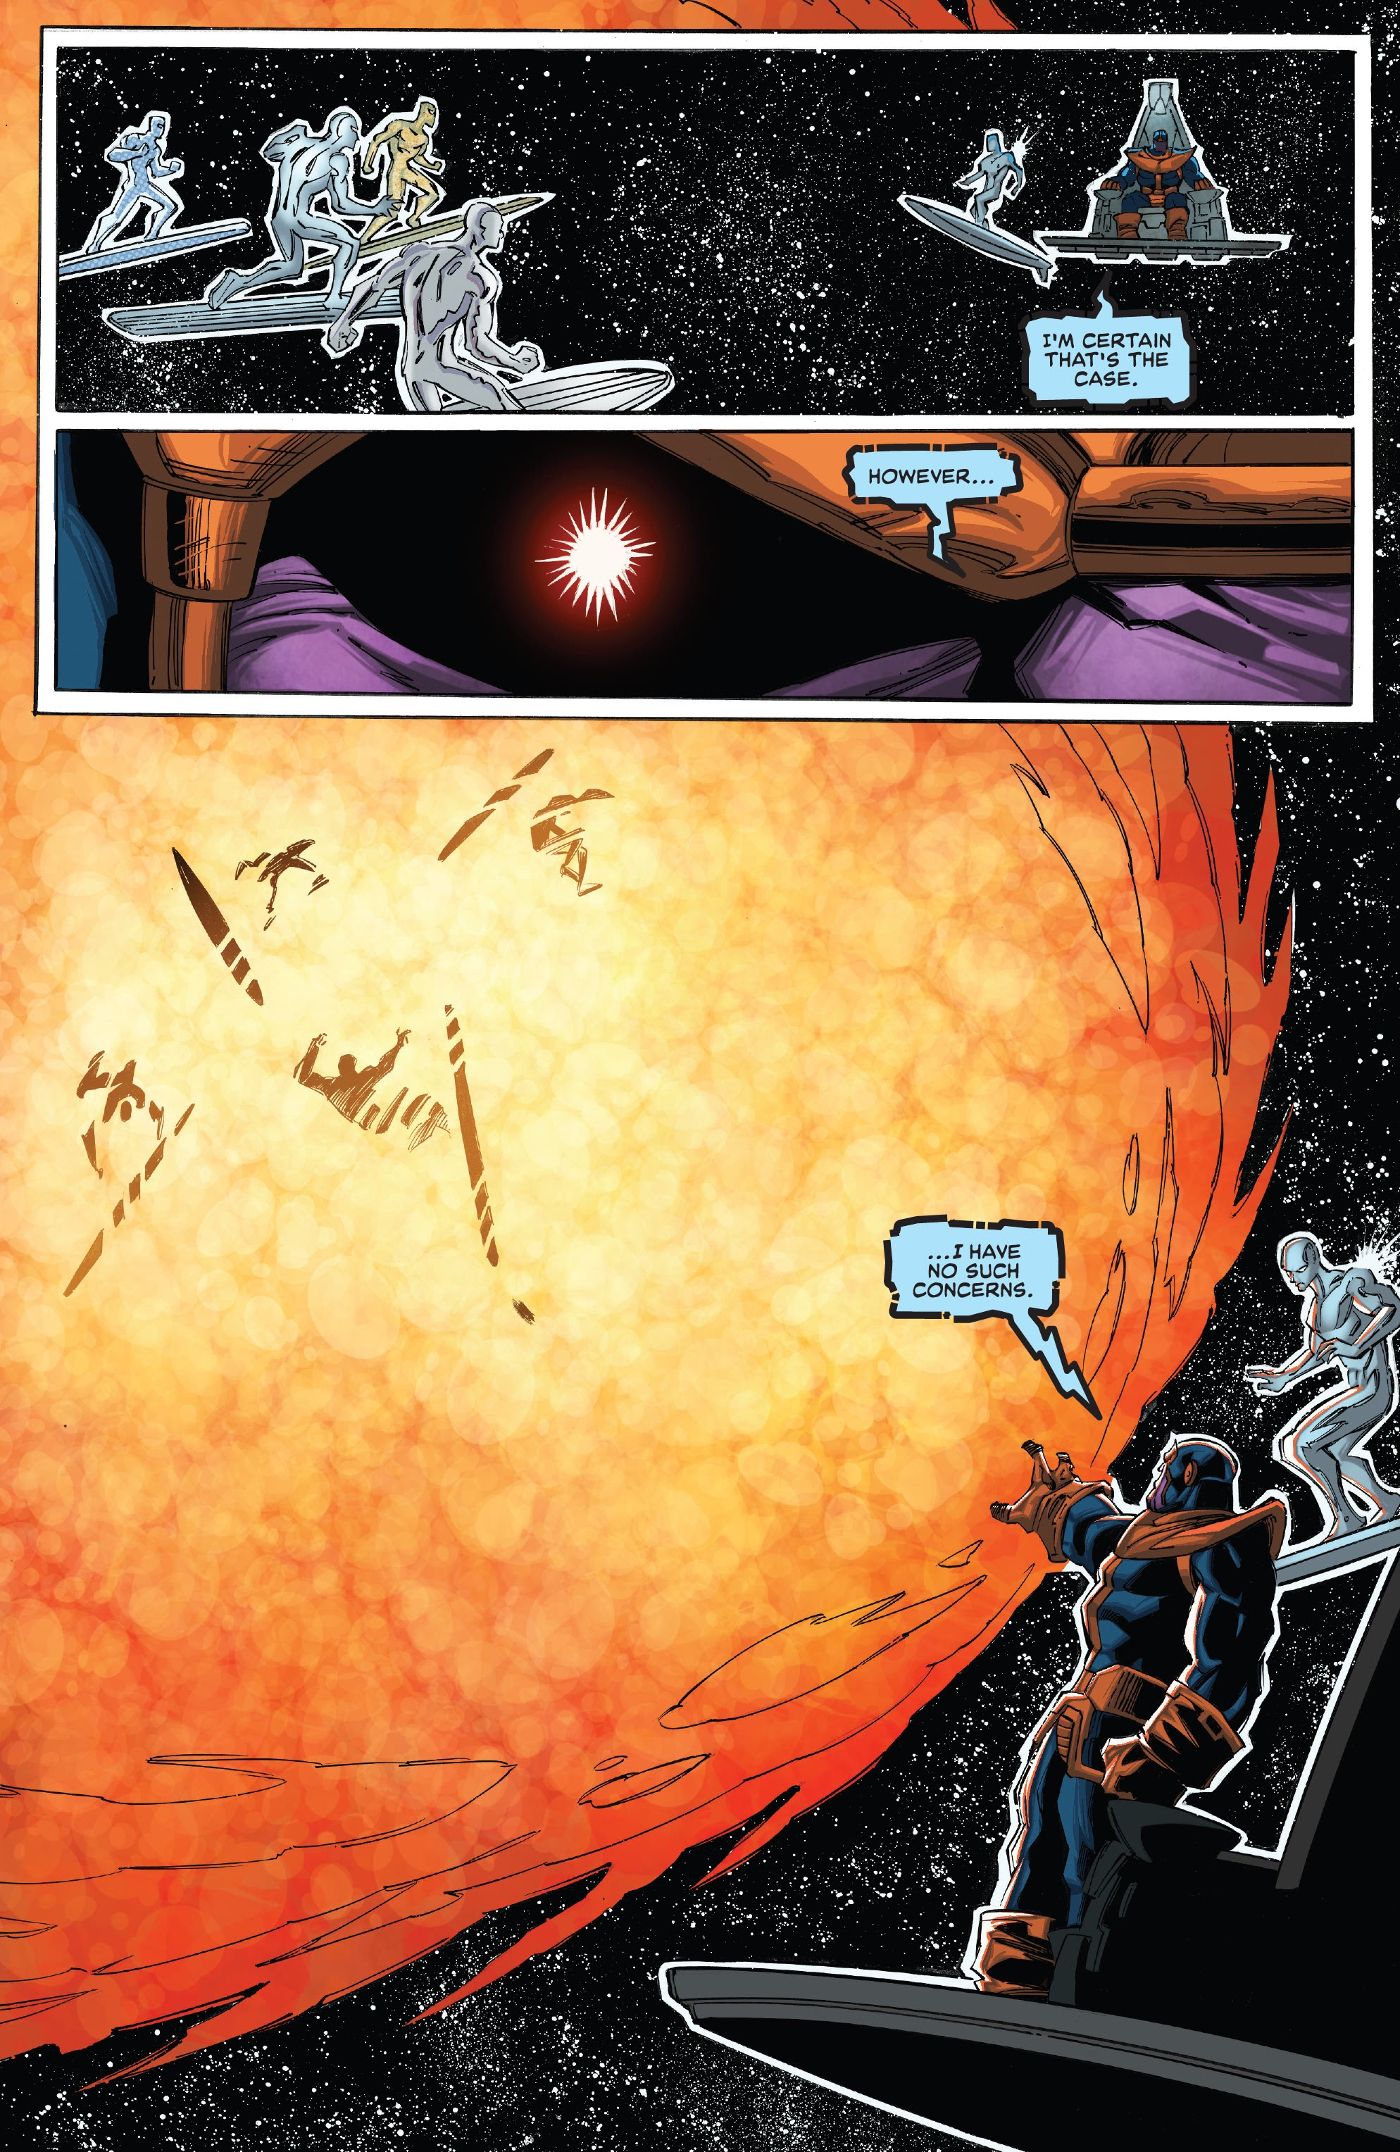 Thanos blasts four Silver Surfer